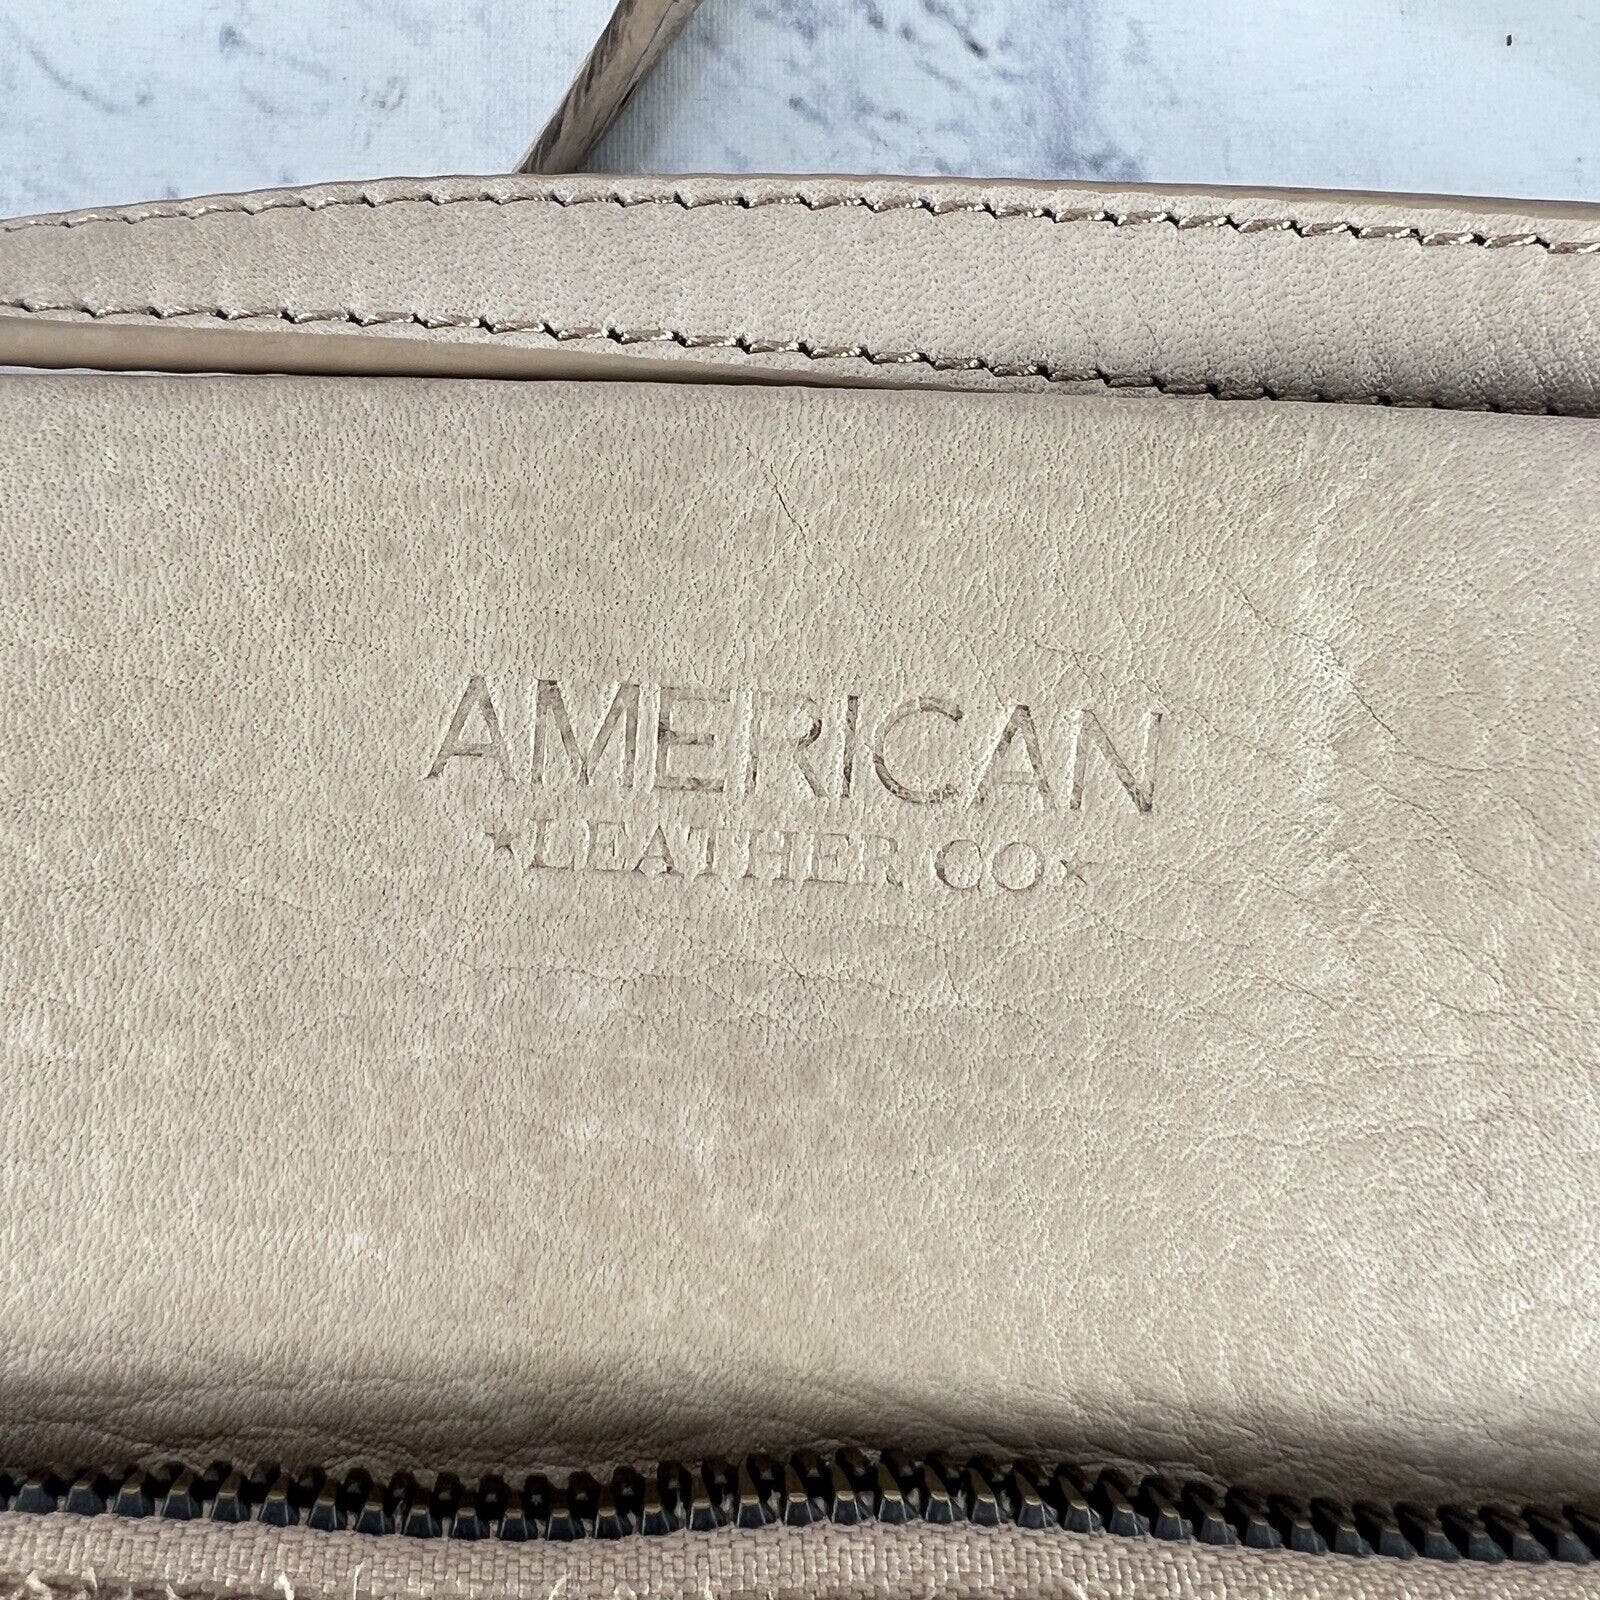 American Leather Co Ridgewood Crossbody Hazel Smooth Bag Purse Beige Neutral